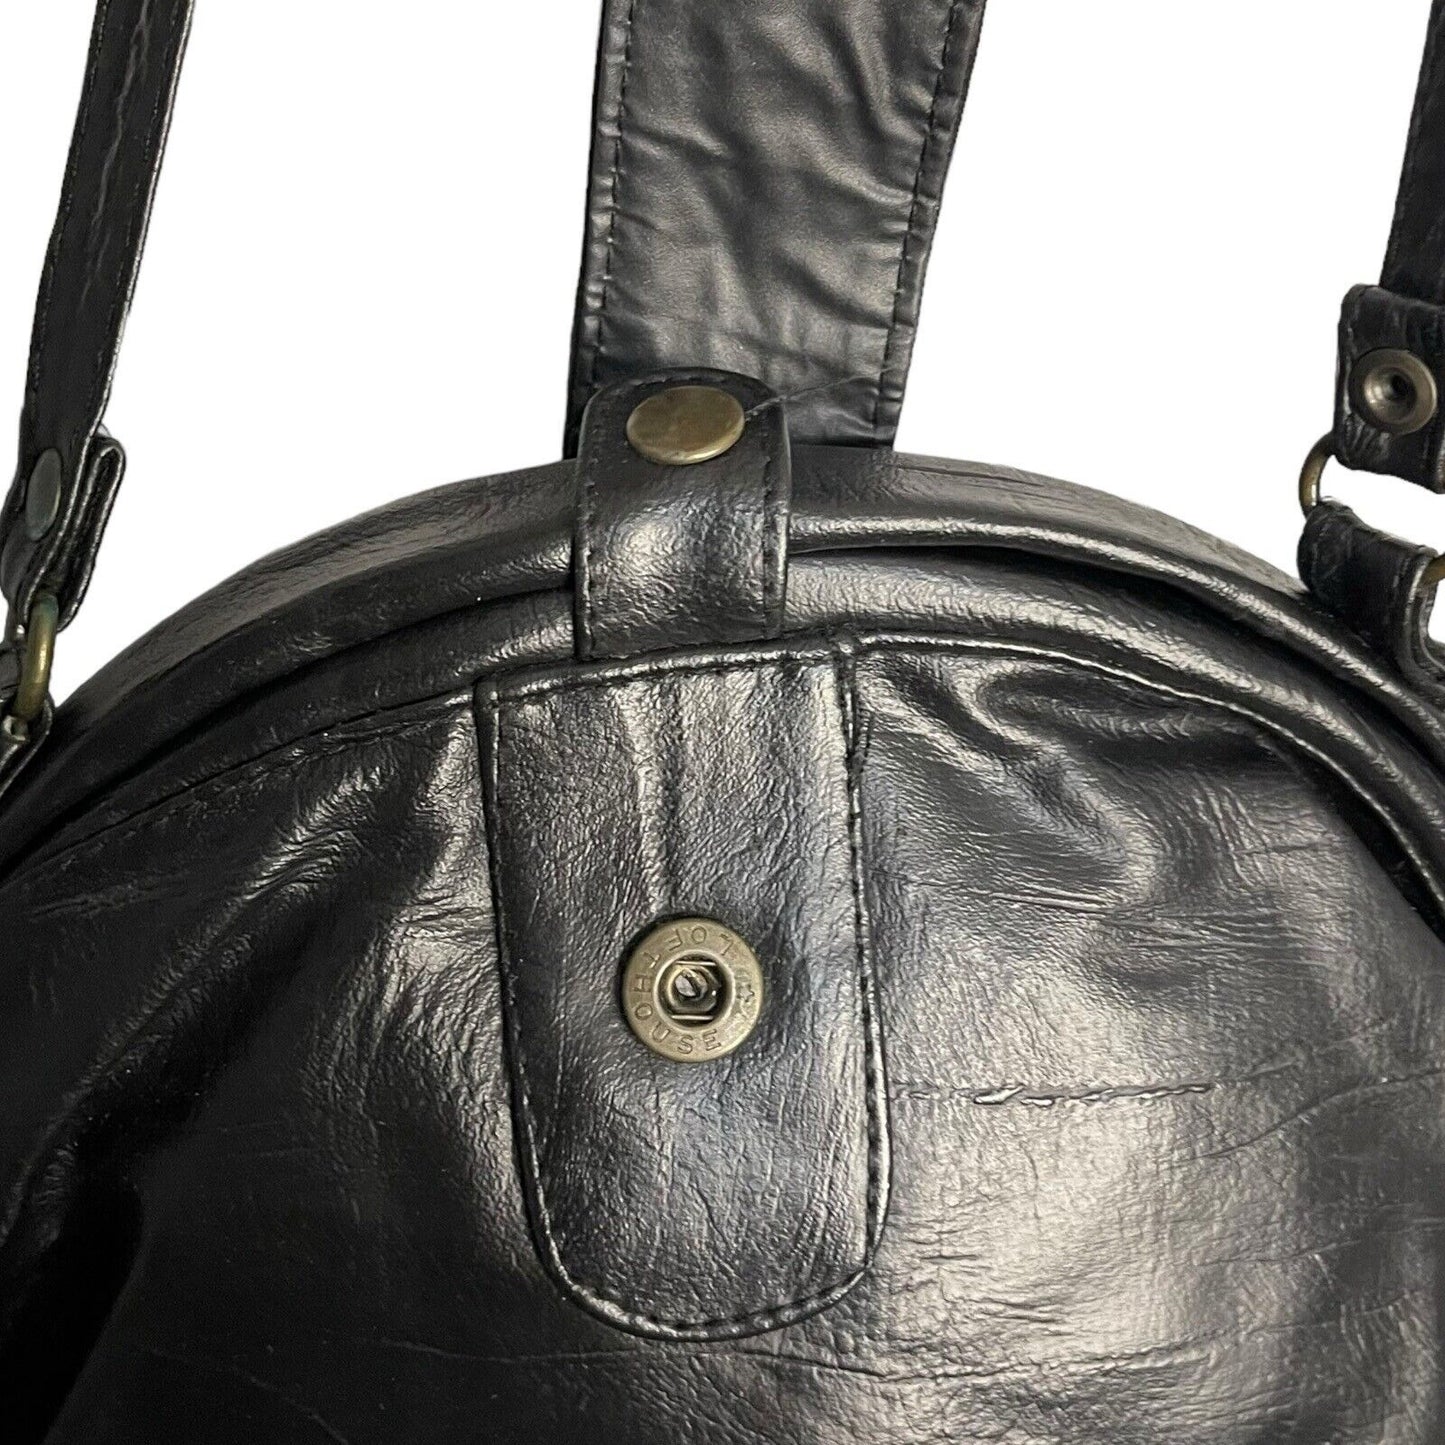 Monique Hunters Run Handbags Faux Leather Cross Body Bag Women's Black Retro